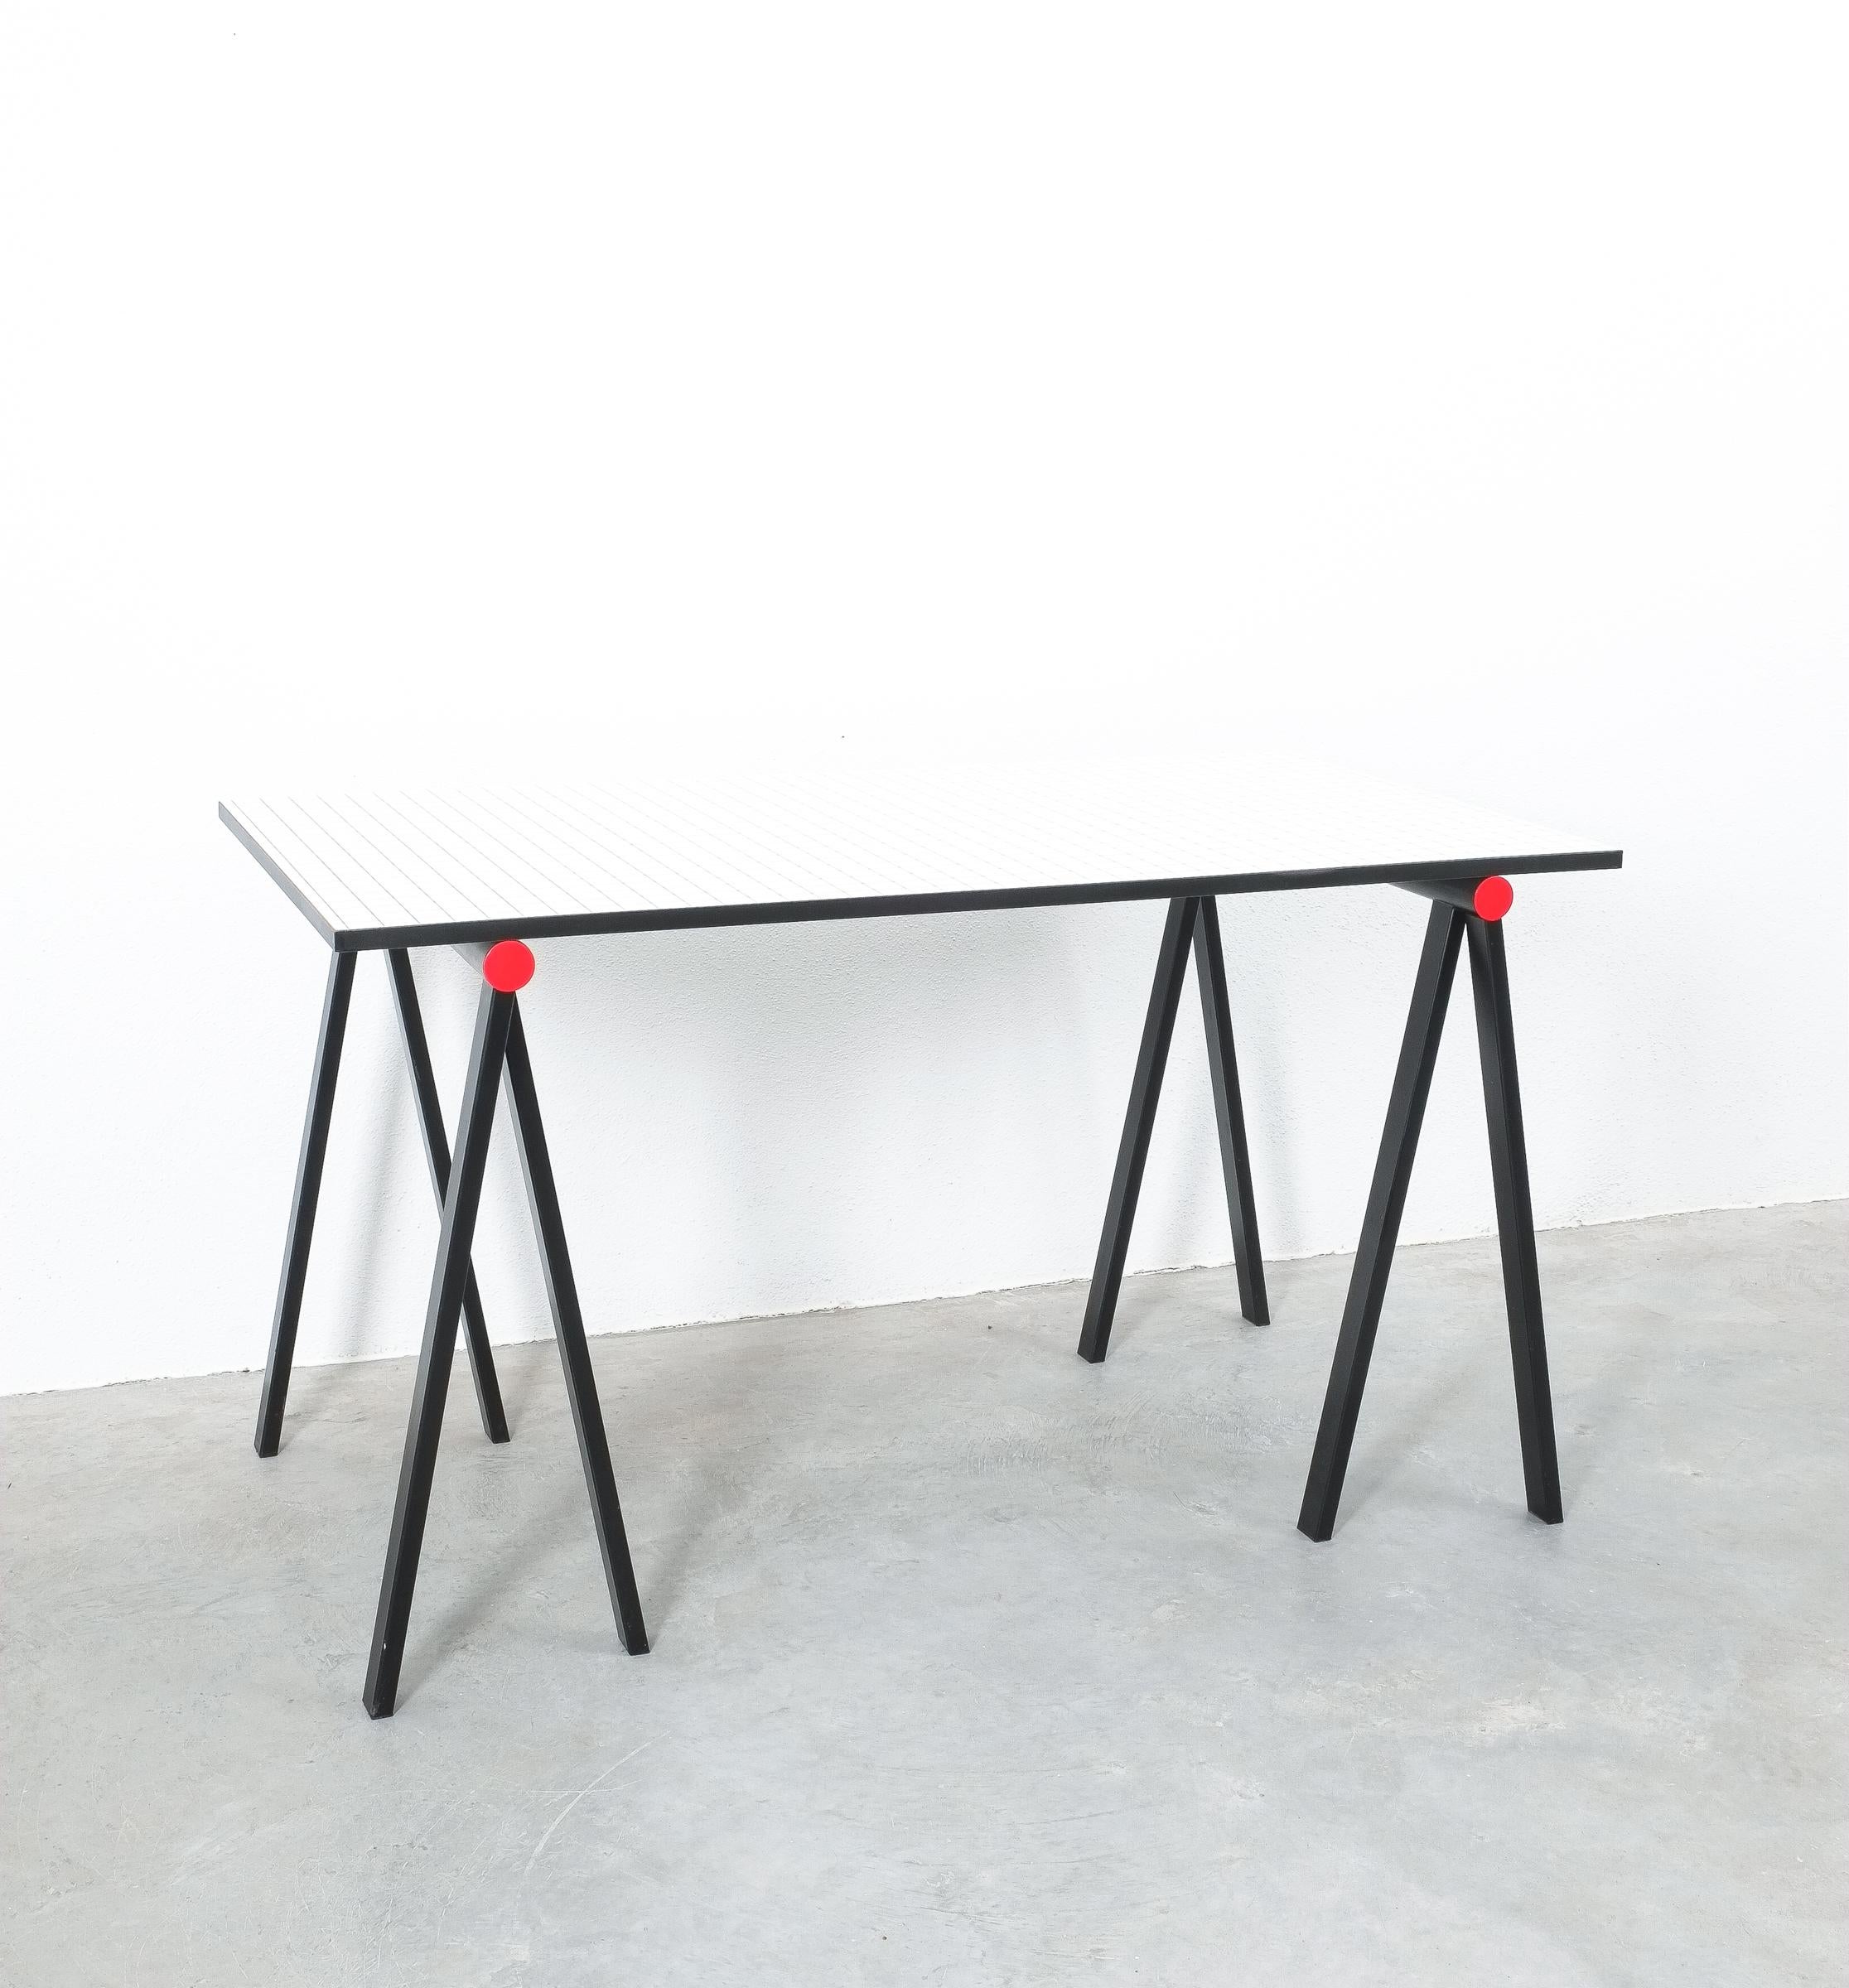 Steel Rodney Kinsman for Bieffeplast Rare Desk Grid Table, Italy, circa 1985